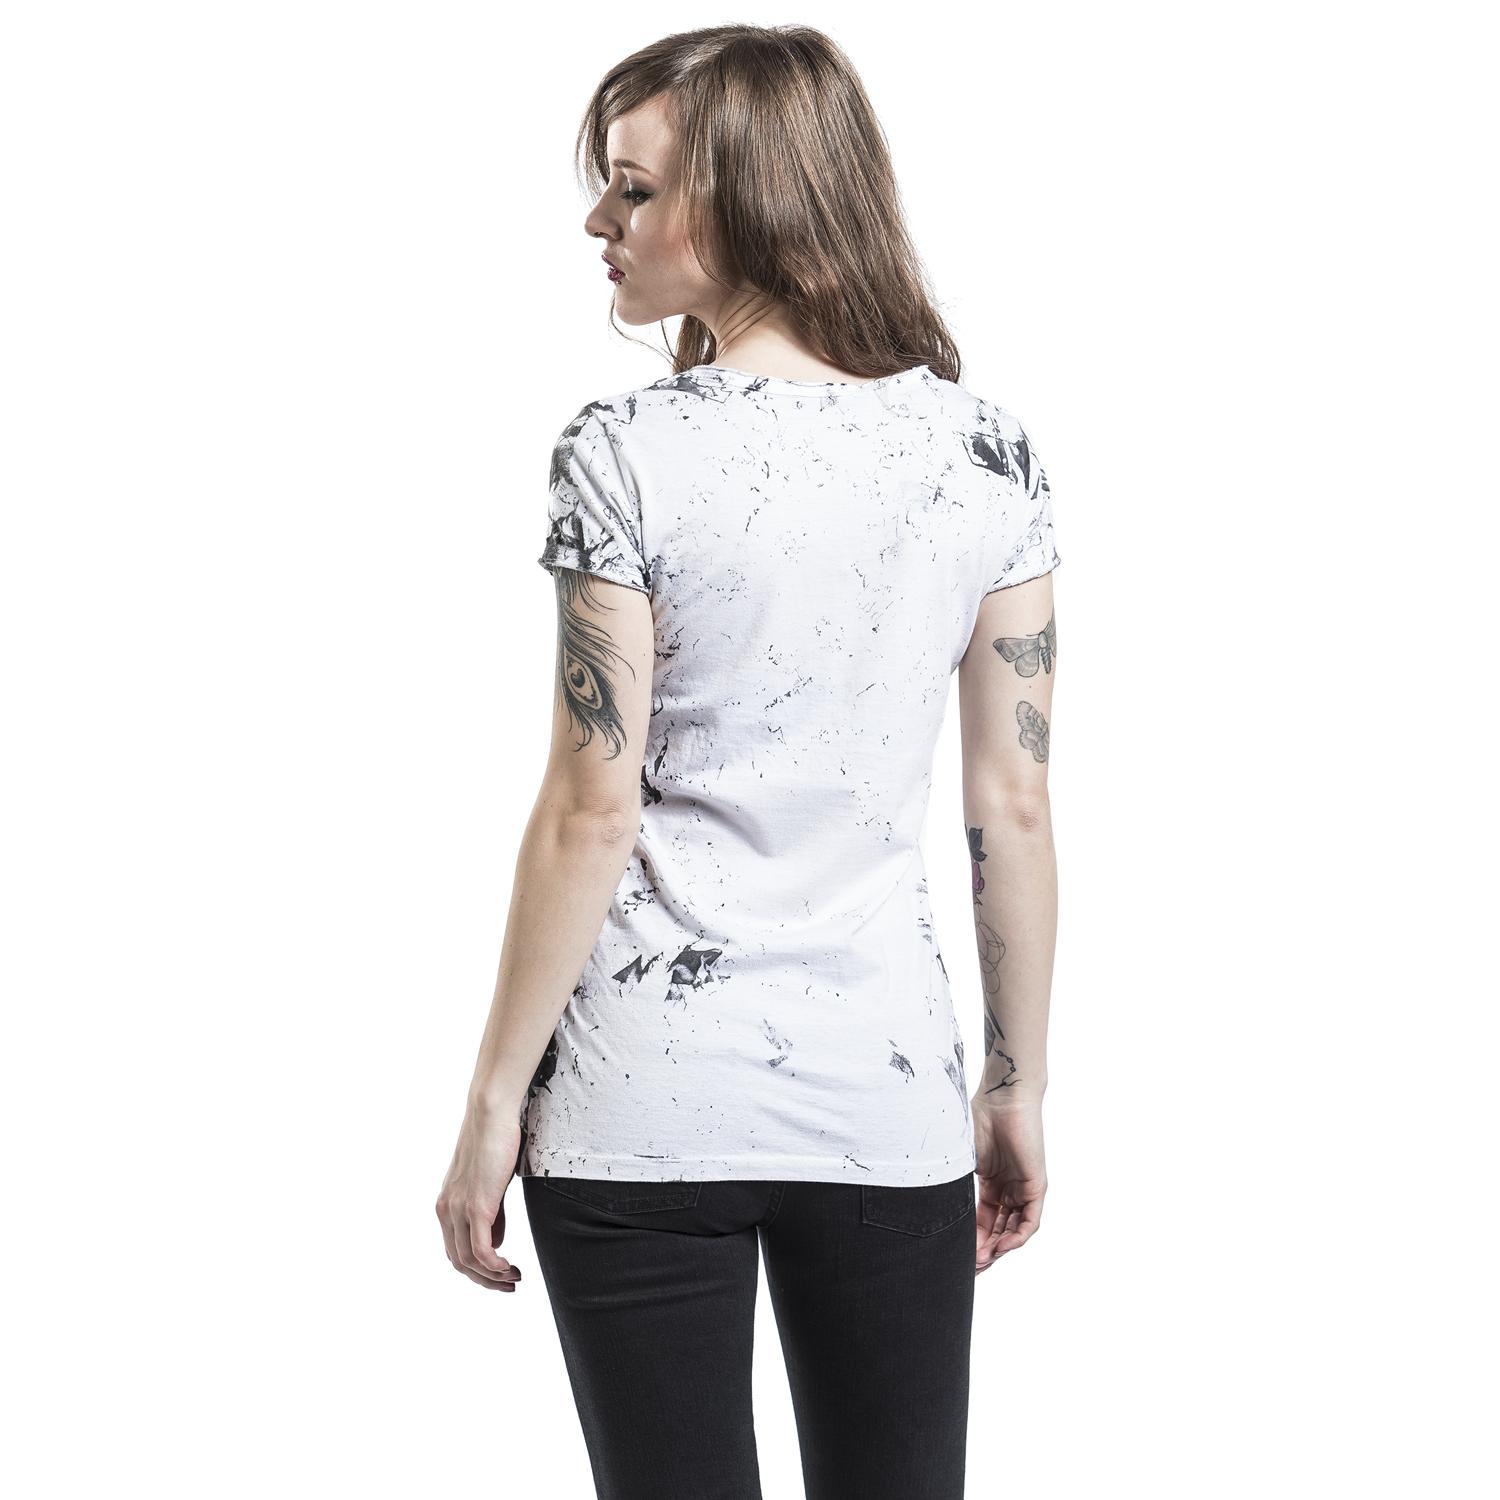 Skeleton Lovers T-shirt Design woman back